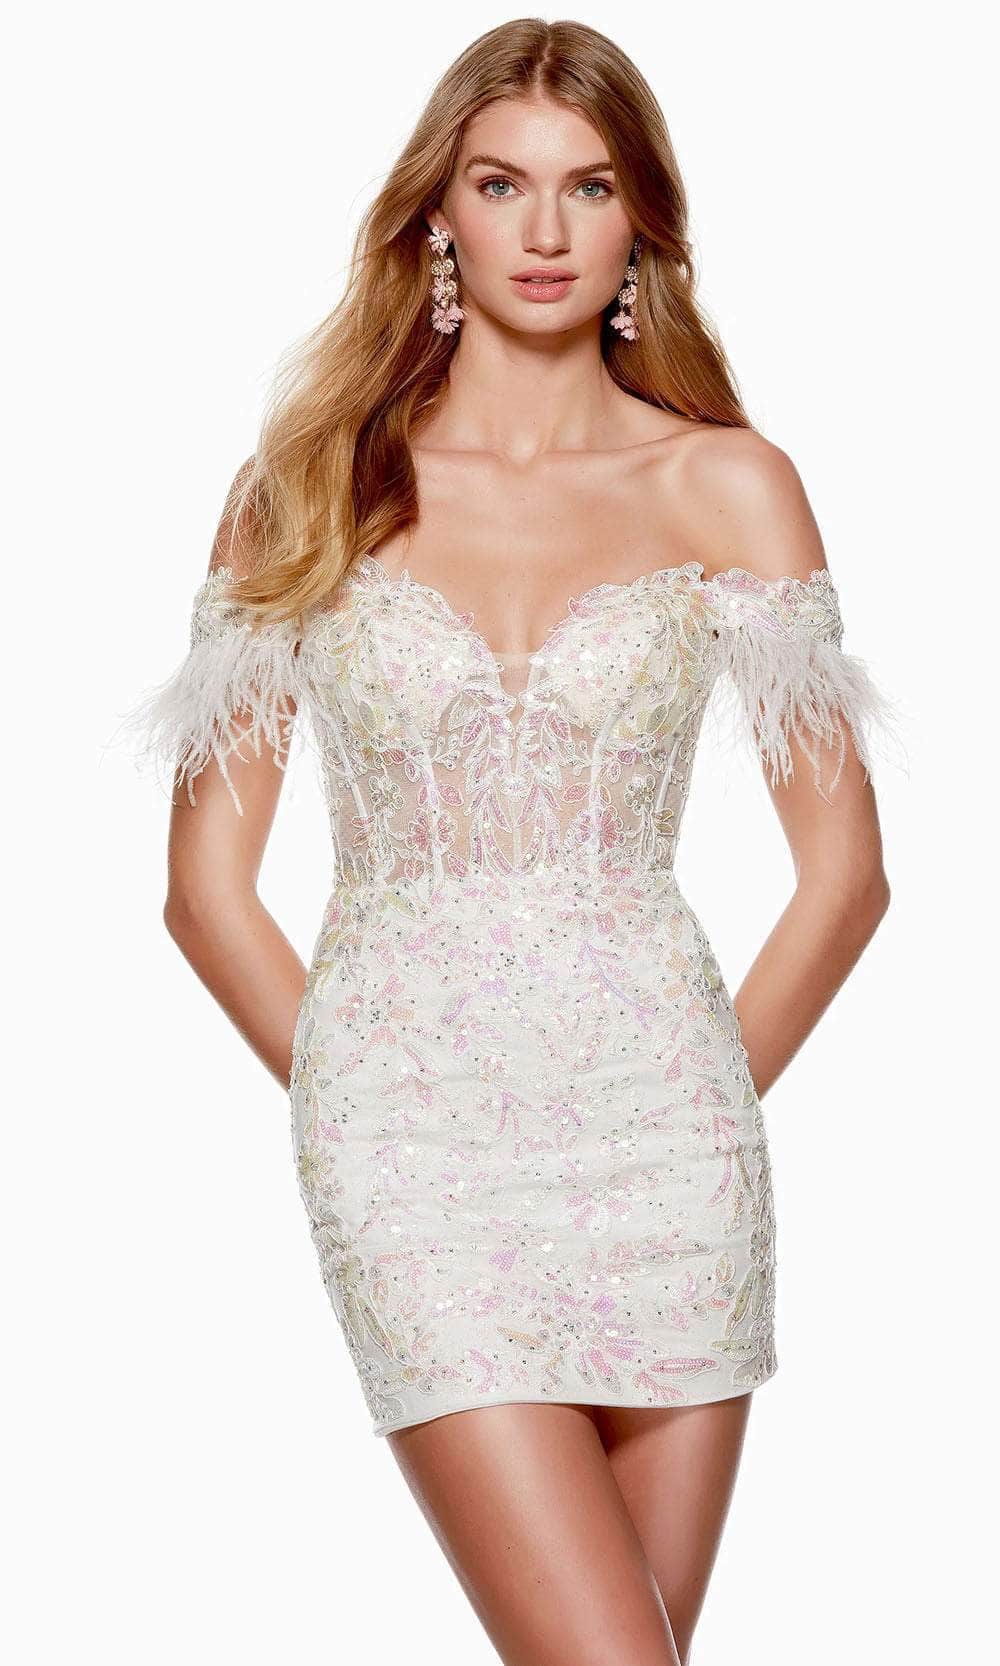 Alyce Paris 4662 - Off Shoulder Sequin Cocktail Dress Special Occasion Dress 000 / Diamond White